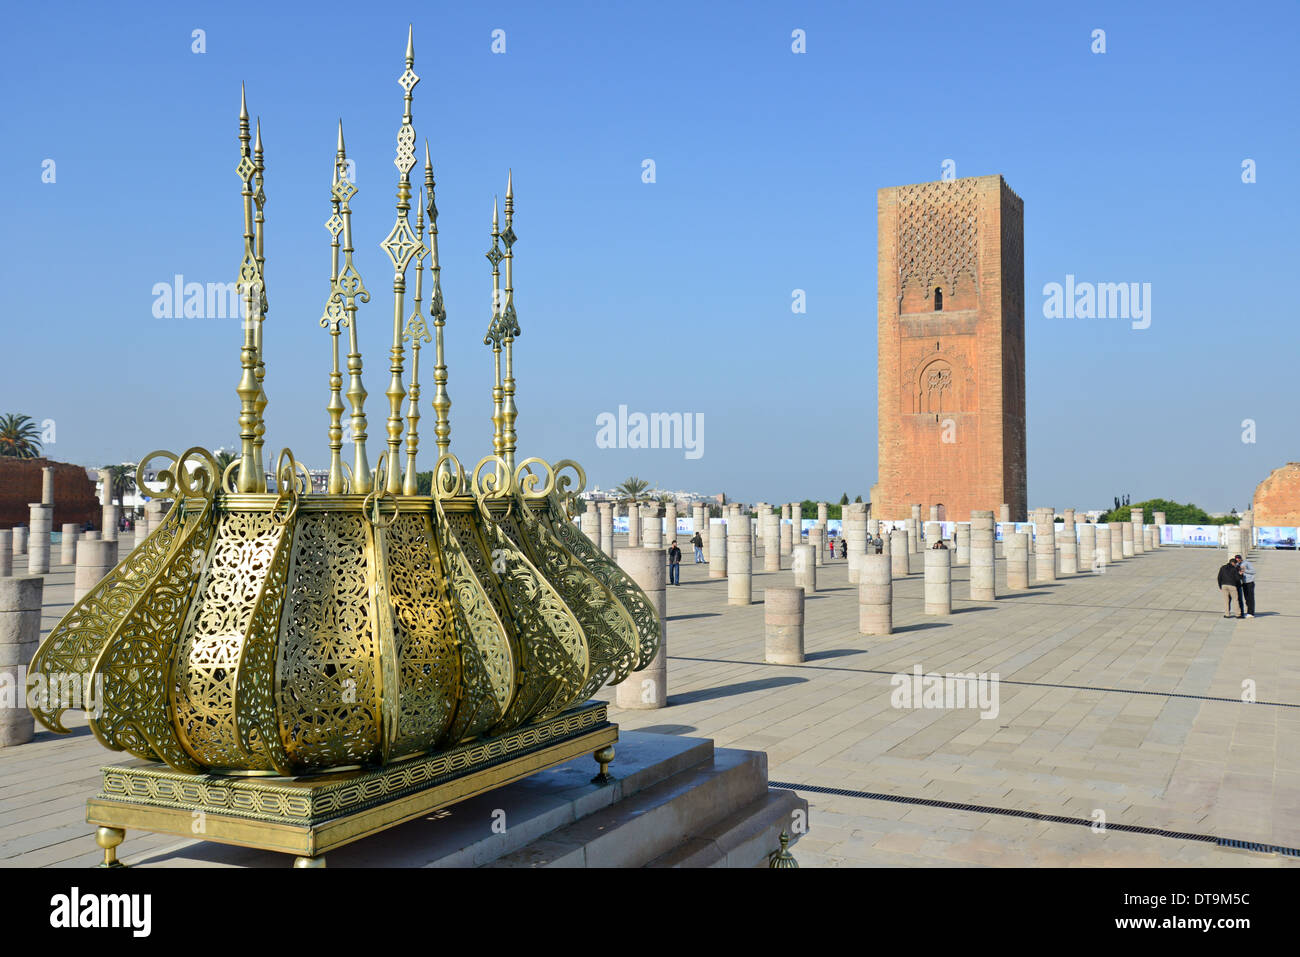 Hassan Tower (Tour Hassan), Boulevard Mohamed Lyazidi, Rabat, Rabat-Salé-Zemmour-Zaer Region, Kingdom of Morocco Stock Photo